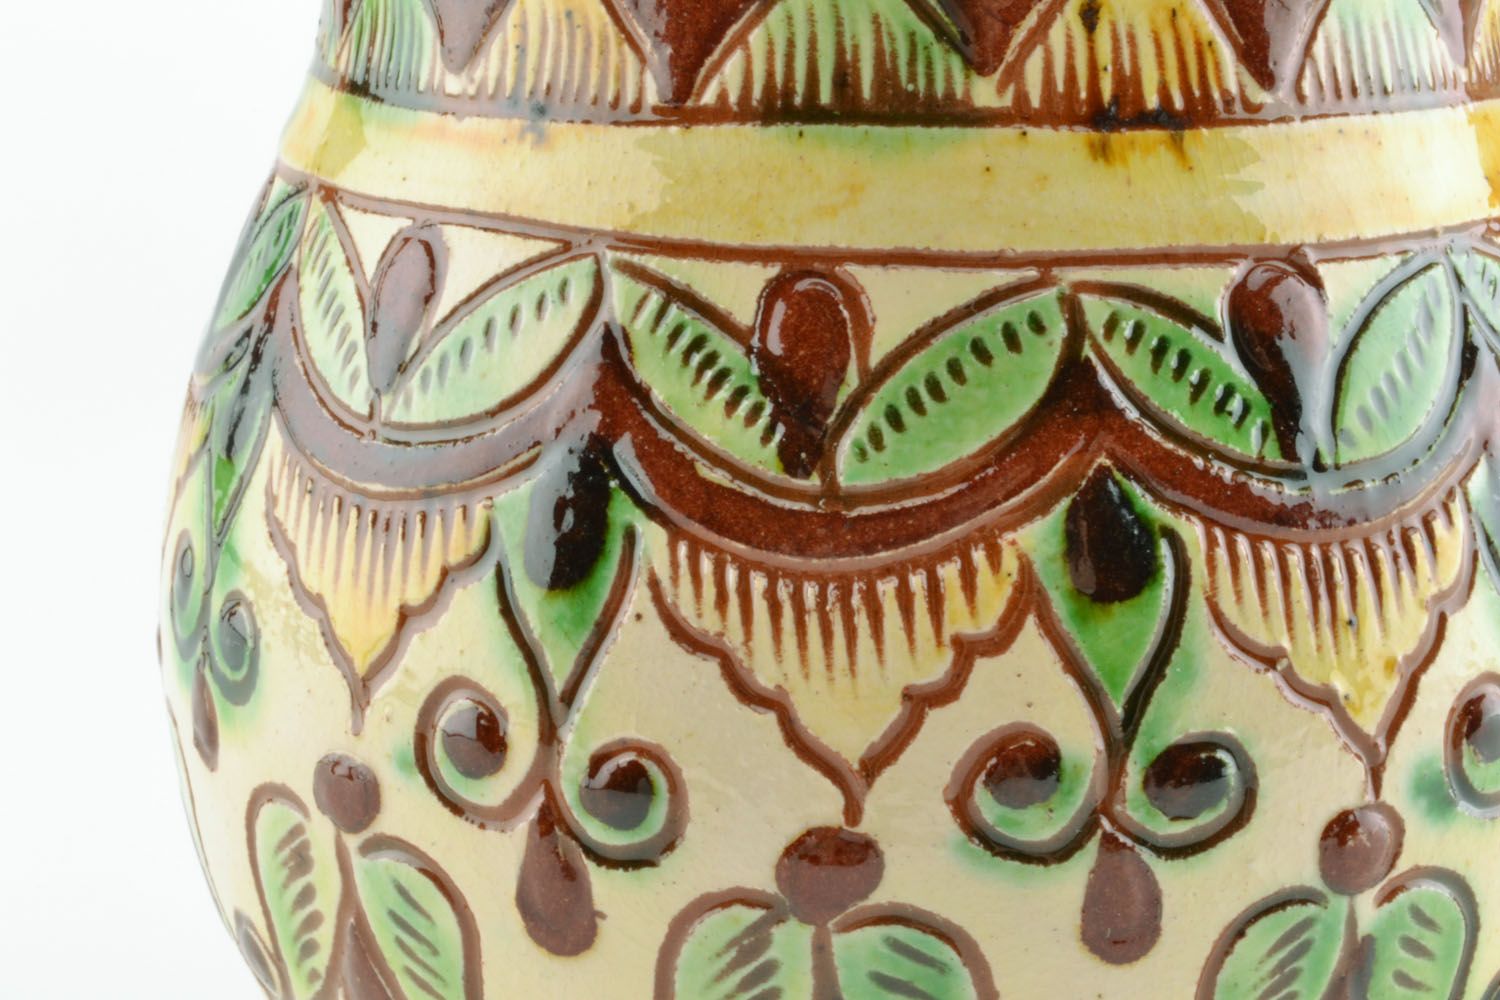 15 oz ceramic handmade creamer pitcher in ethnic design 1 lb photo 4